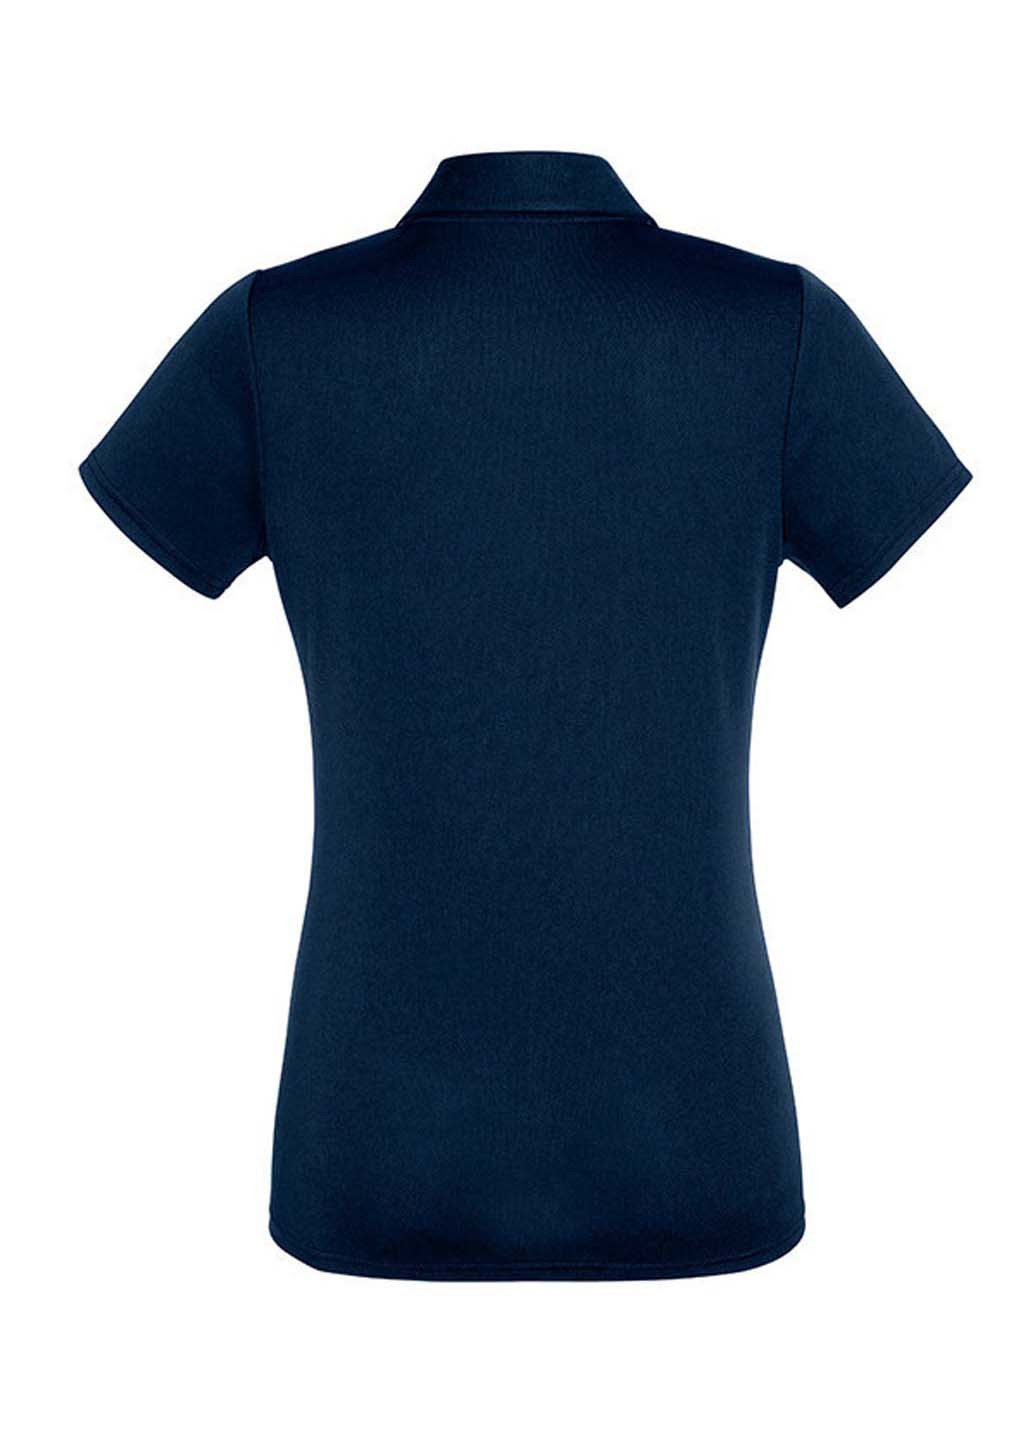 Темно-синяя женская футболка-поло Fruit of the Loom